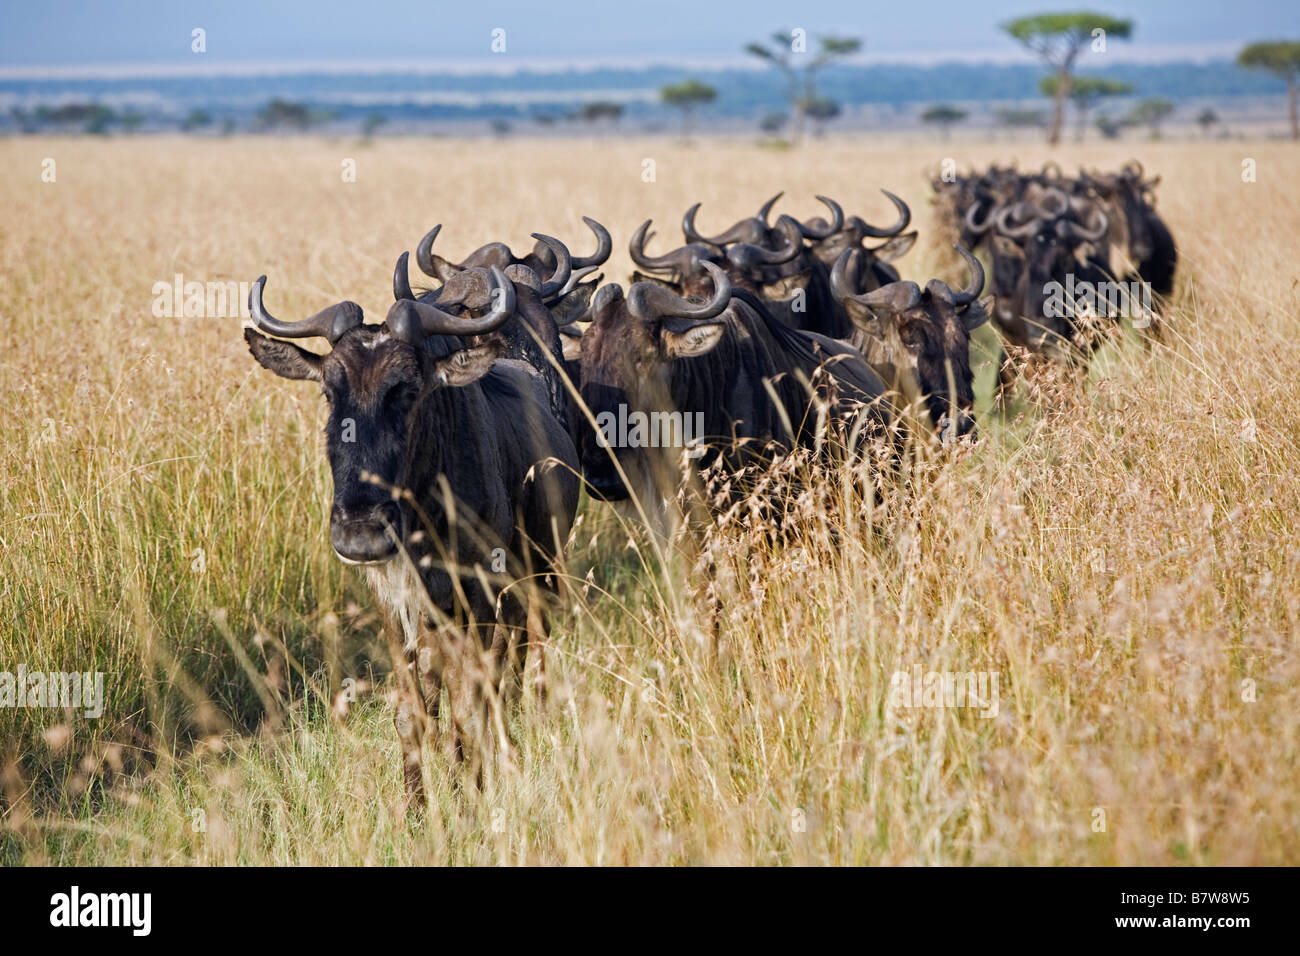 Kenya, Maasai Mara, Narok district. A column of wildebeest moves through long grass during the annual wildebeest migration Stock Photo